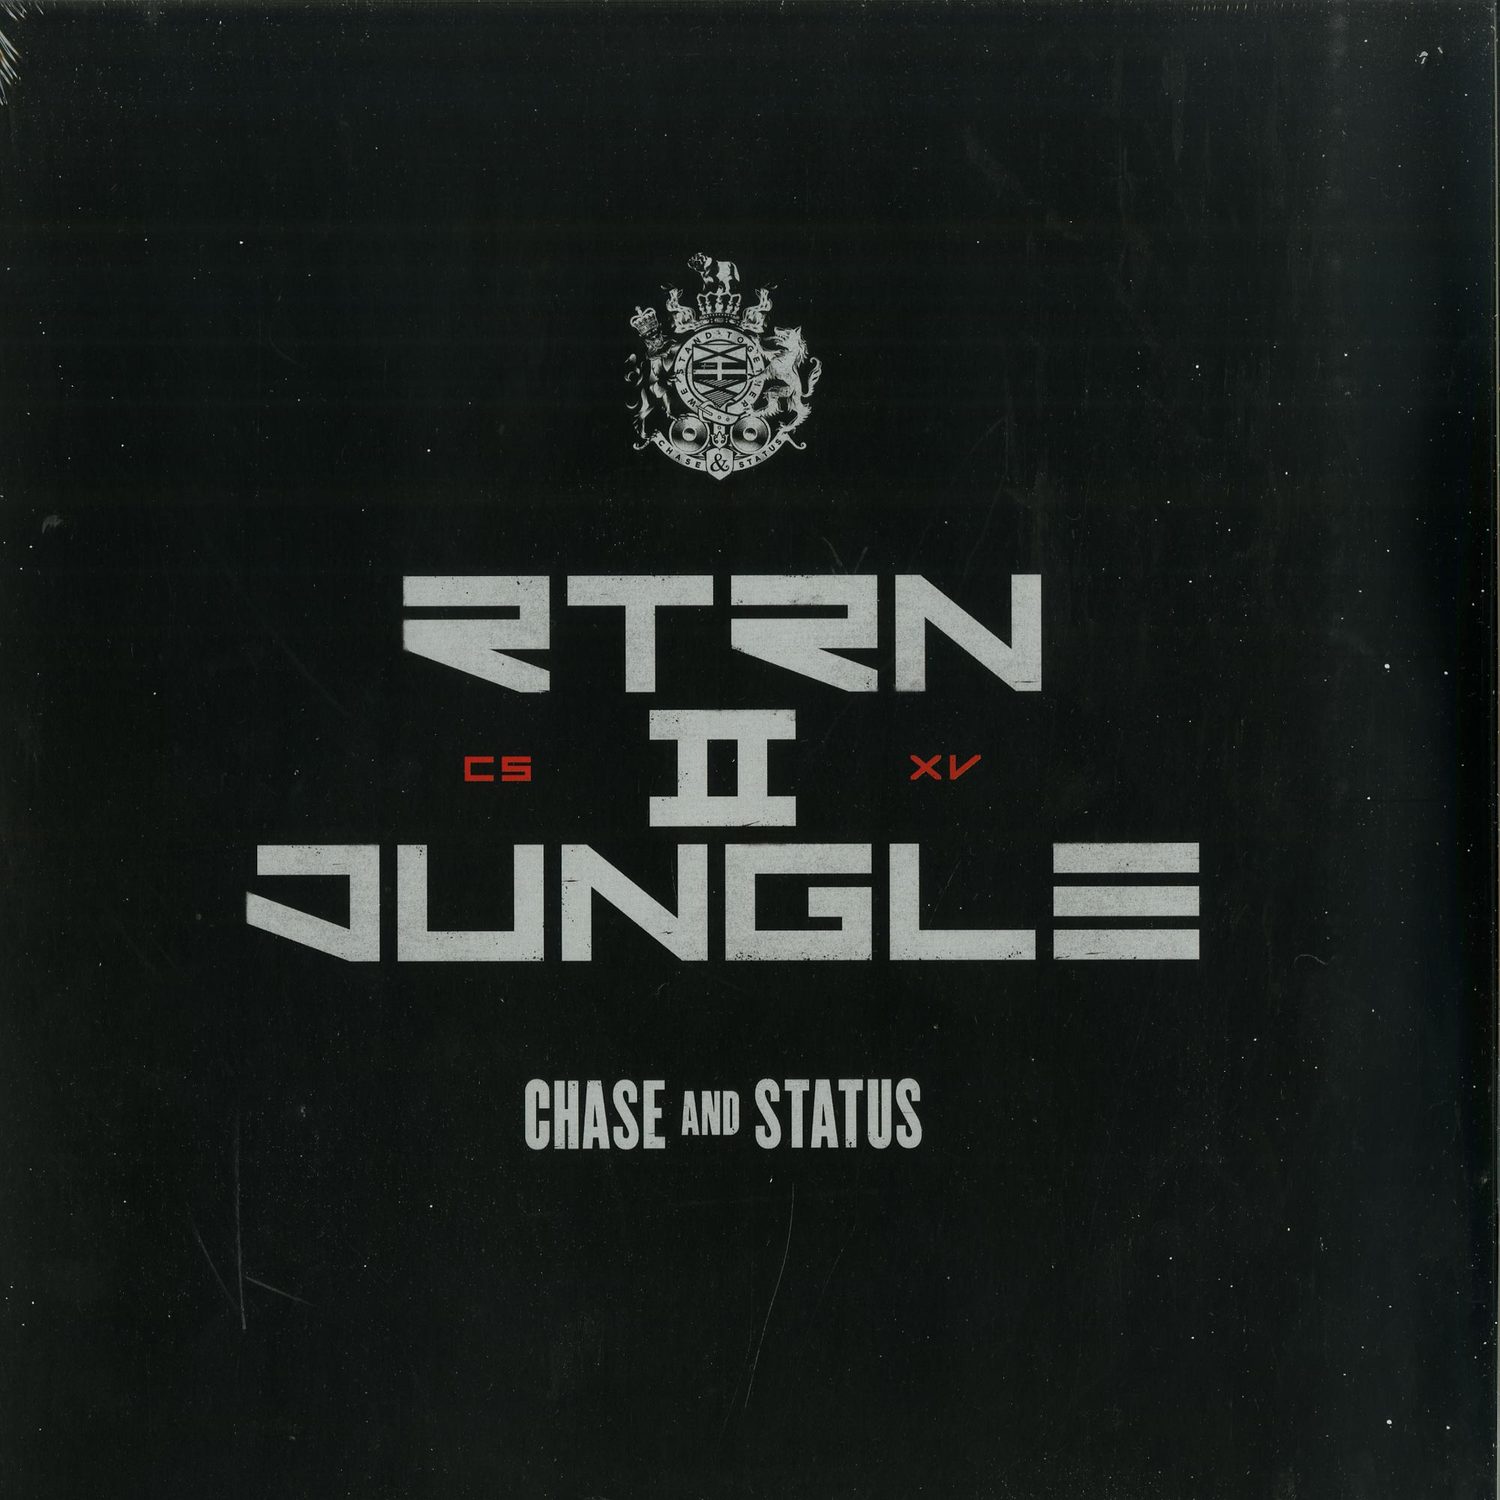 Chase & Status - RTRN II JUNGLE 